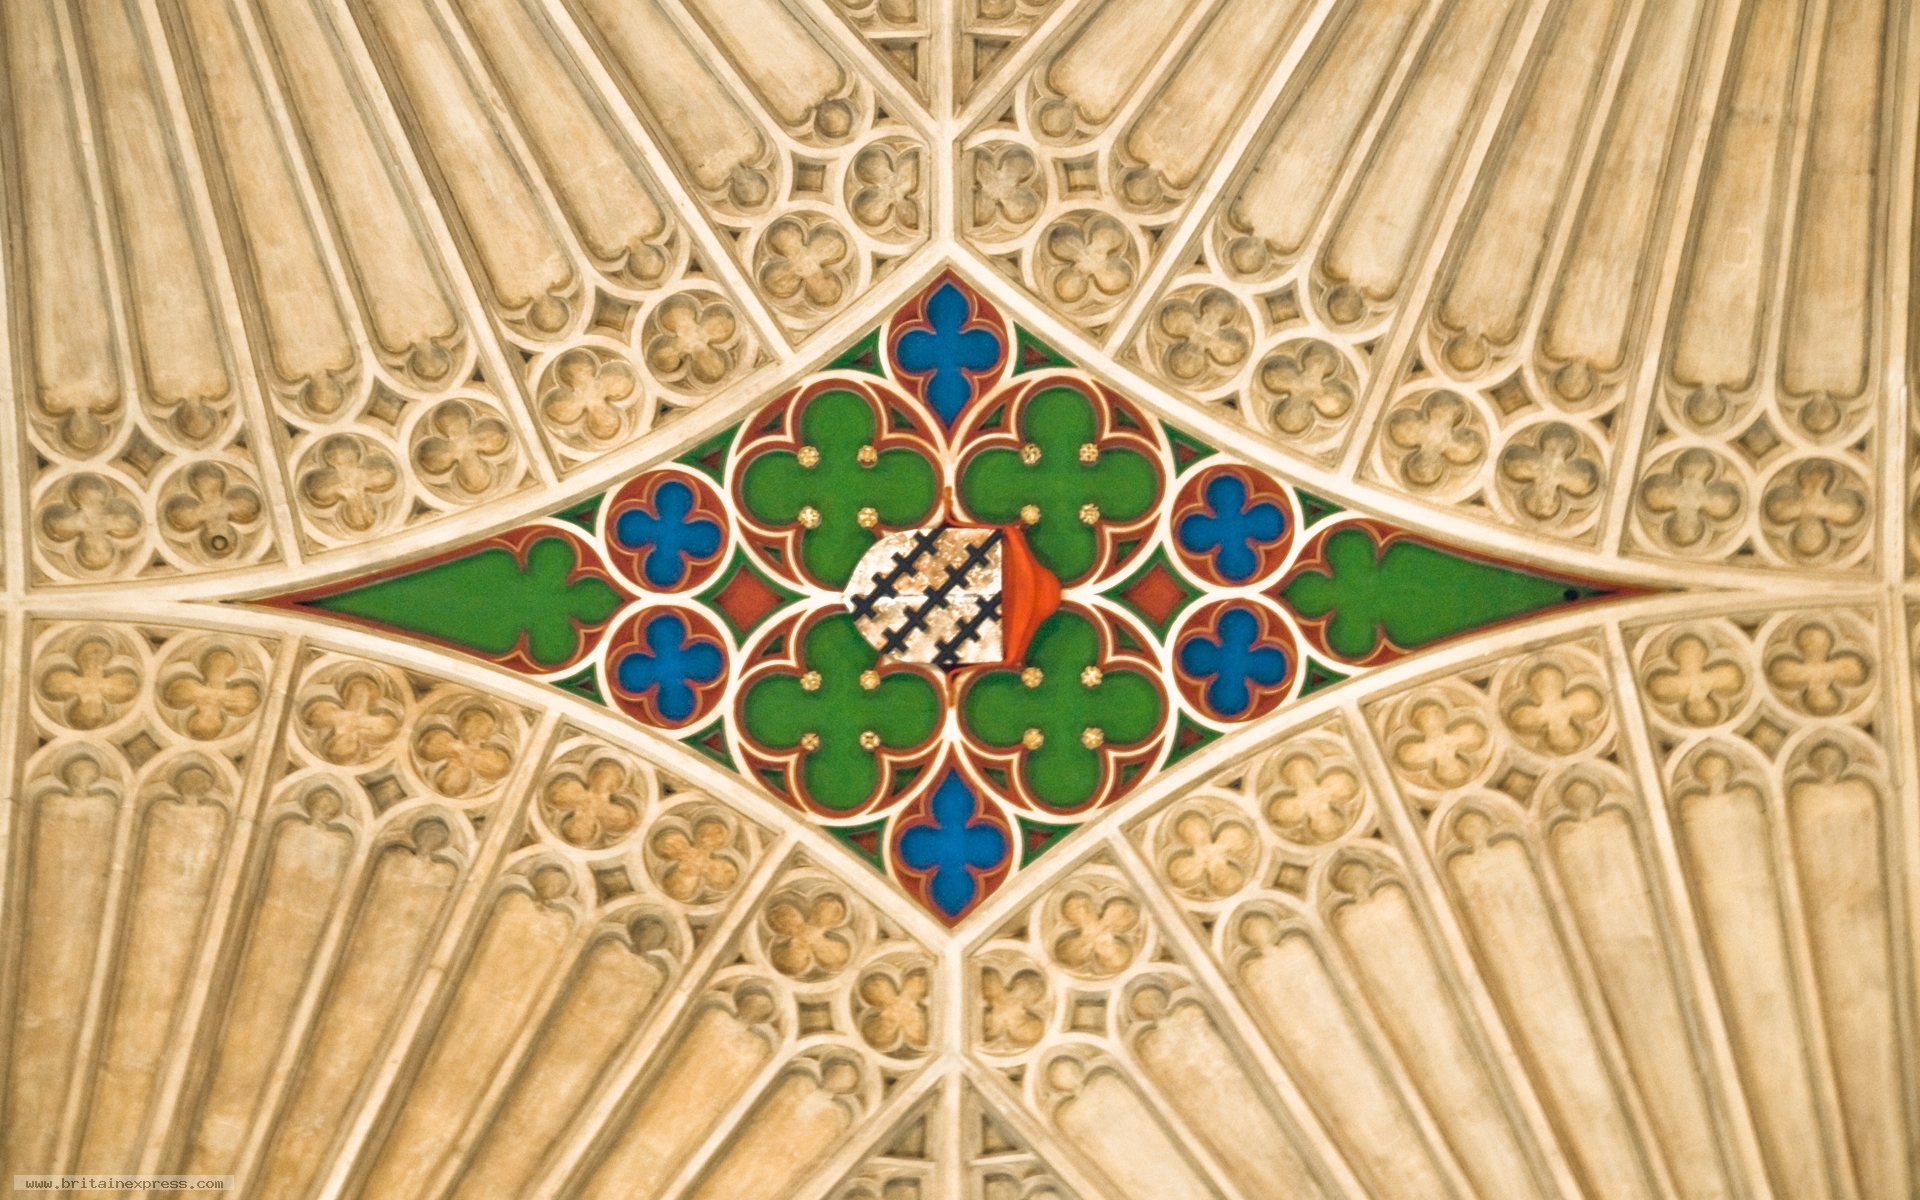 Bath Abbey Gothic Architecture Wallpaper Hd - Bath Abbey Fan Vaulting - HD Wallpaper 